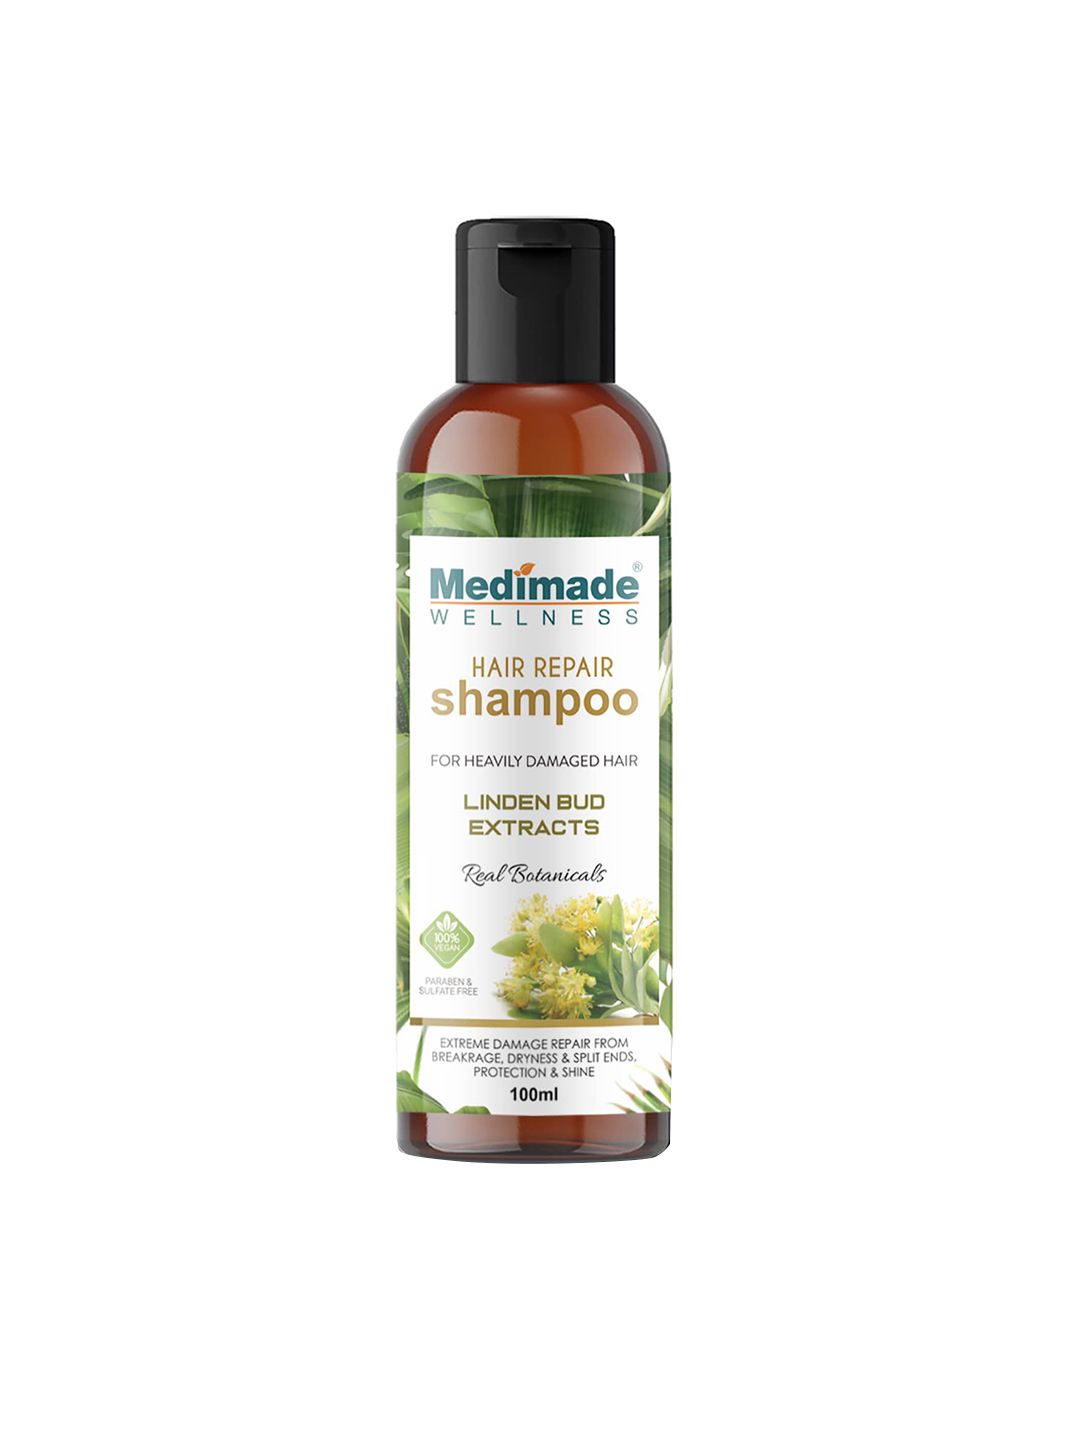 Medimade Hair Repair Shampoo 100ml Price in India